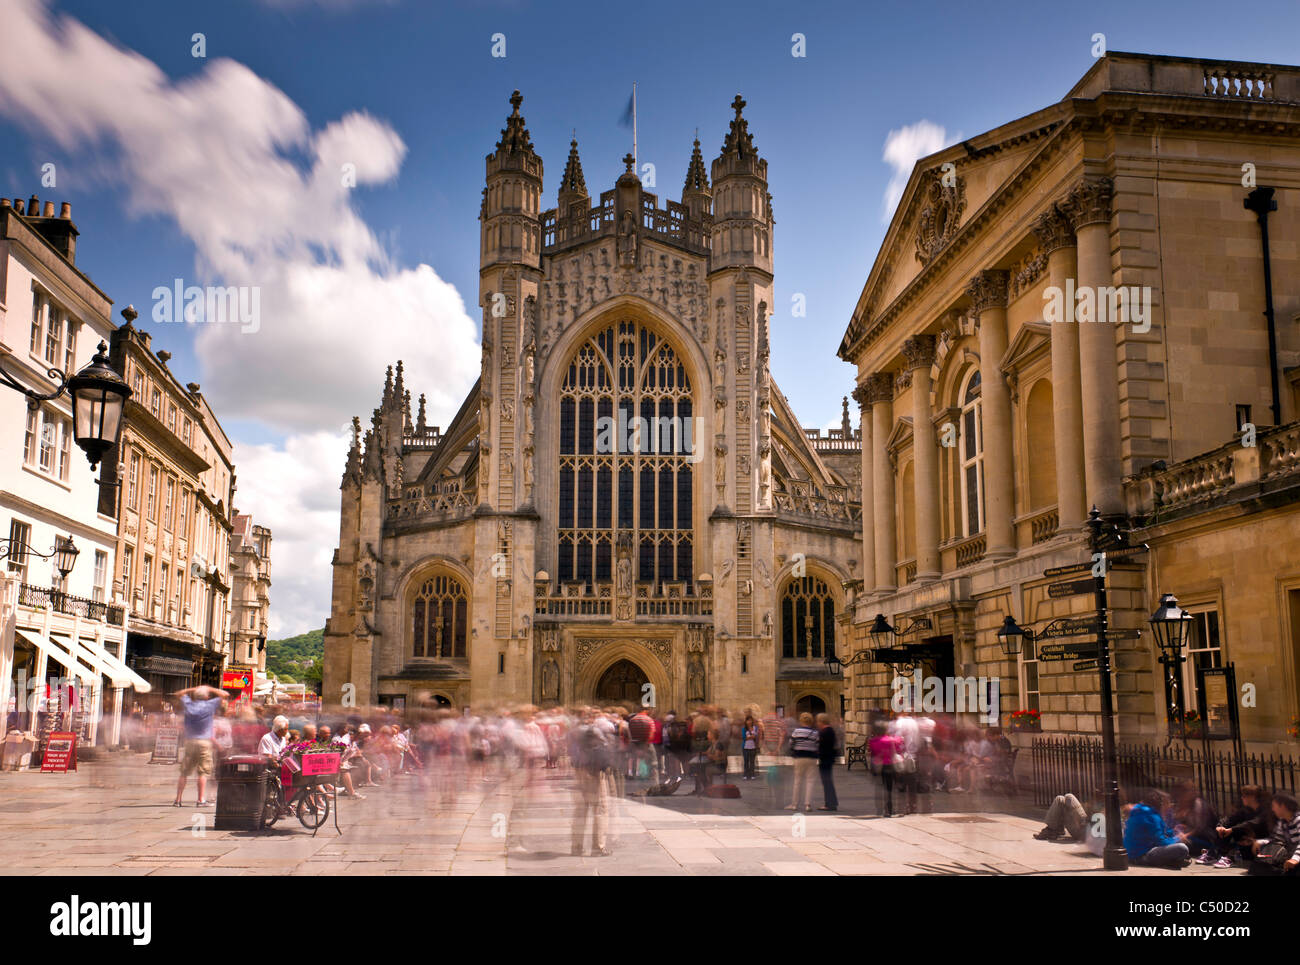 The City of Bath, Somerset - England Stock Photo